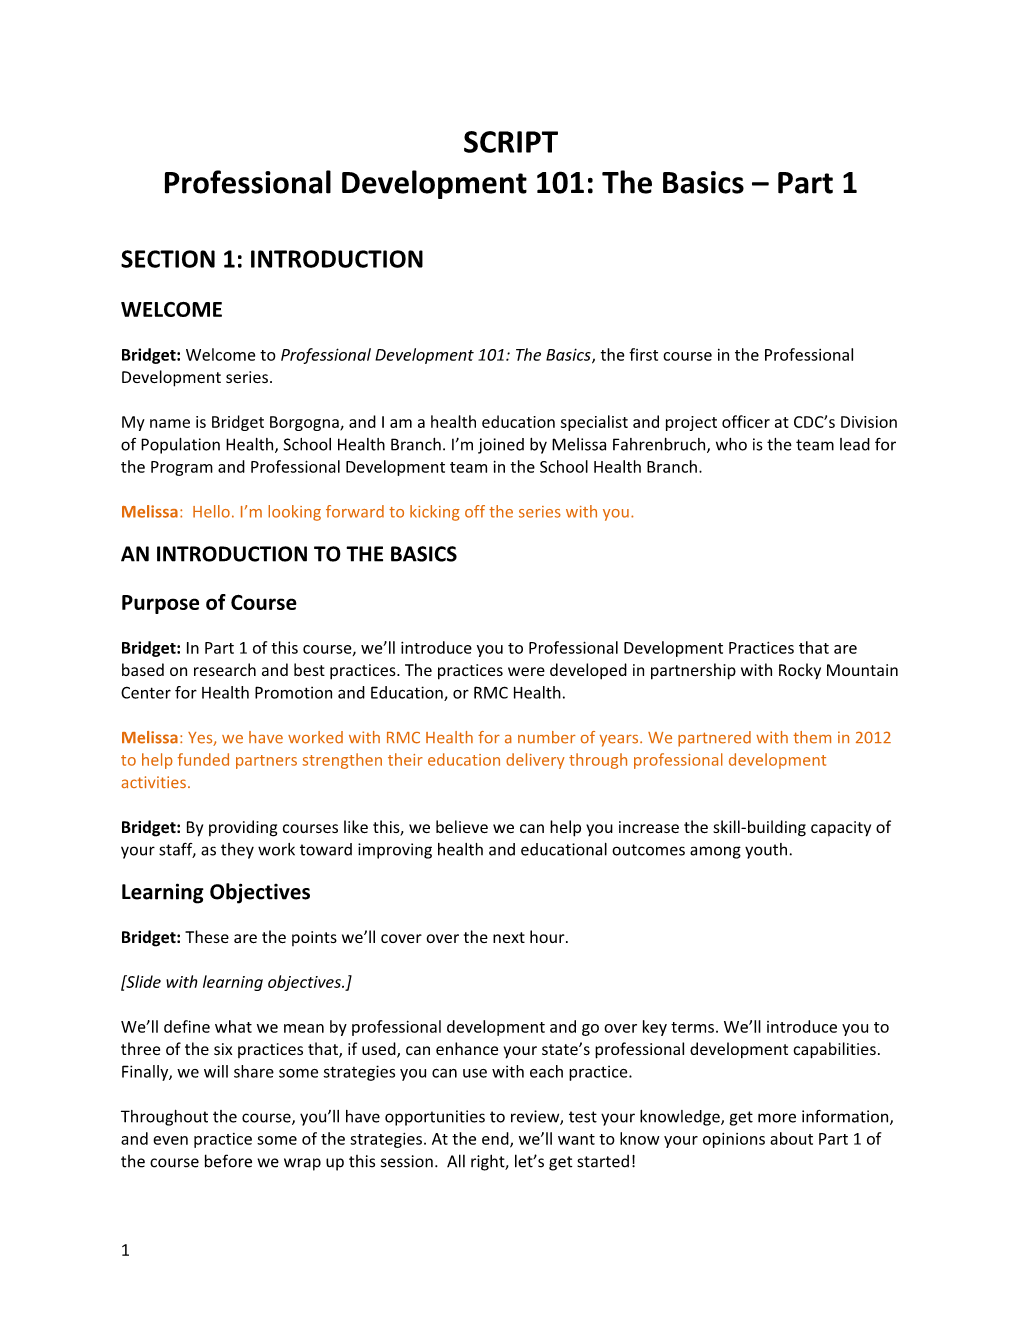 Professional Development 101: the Basics Part 1